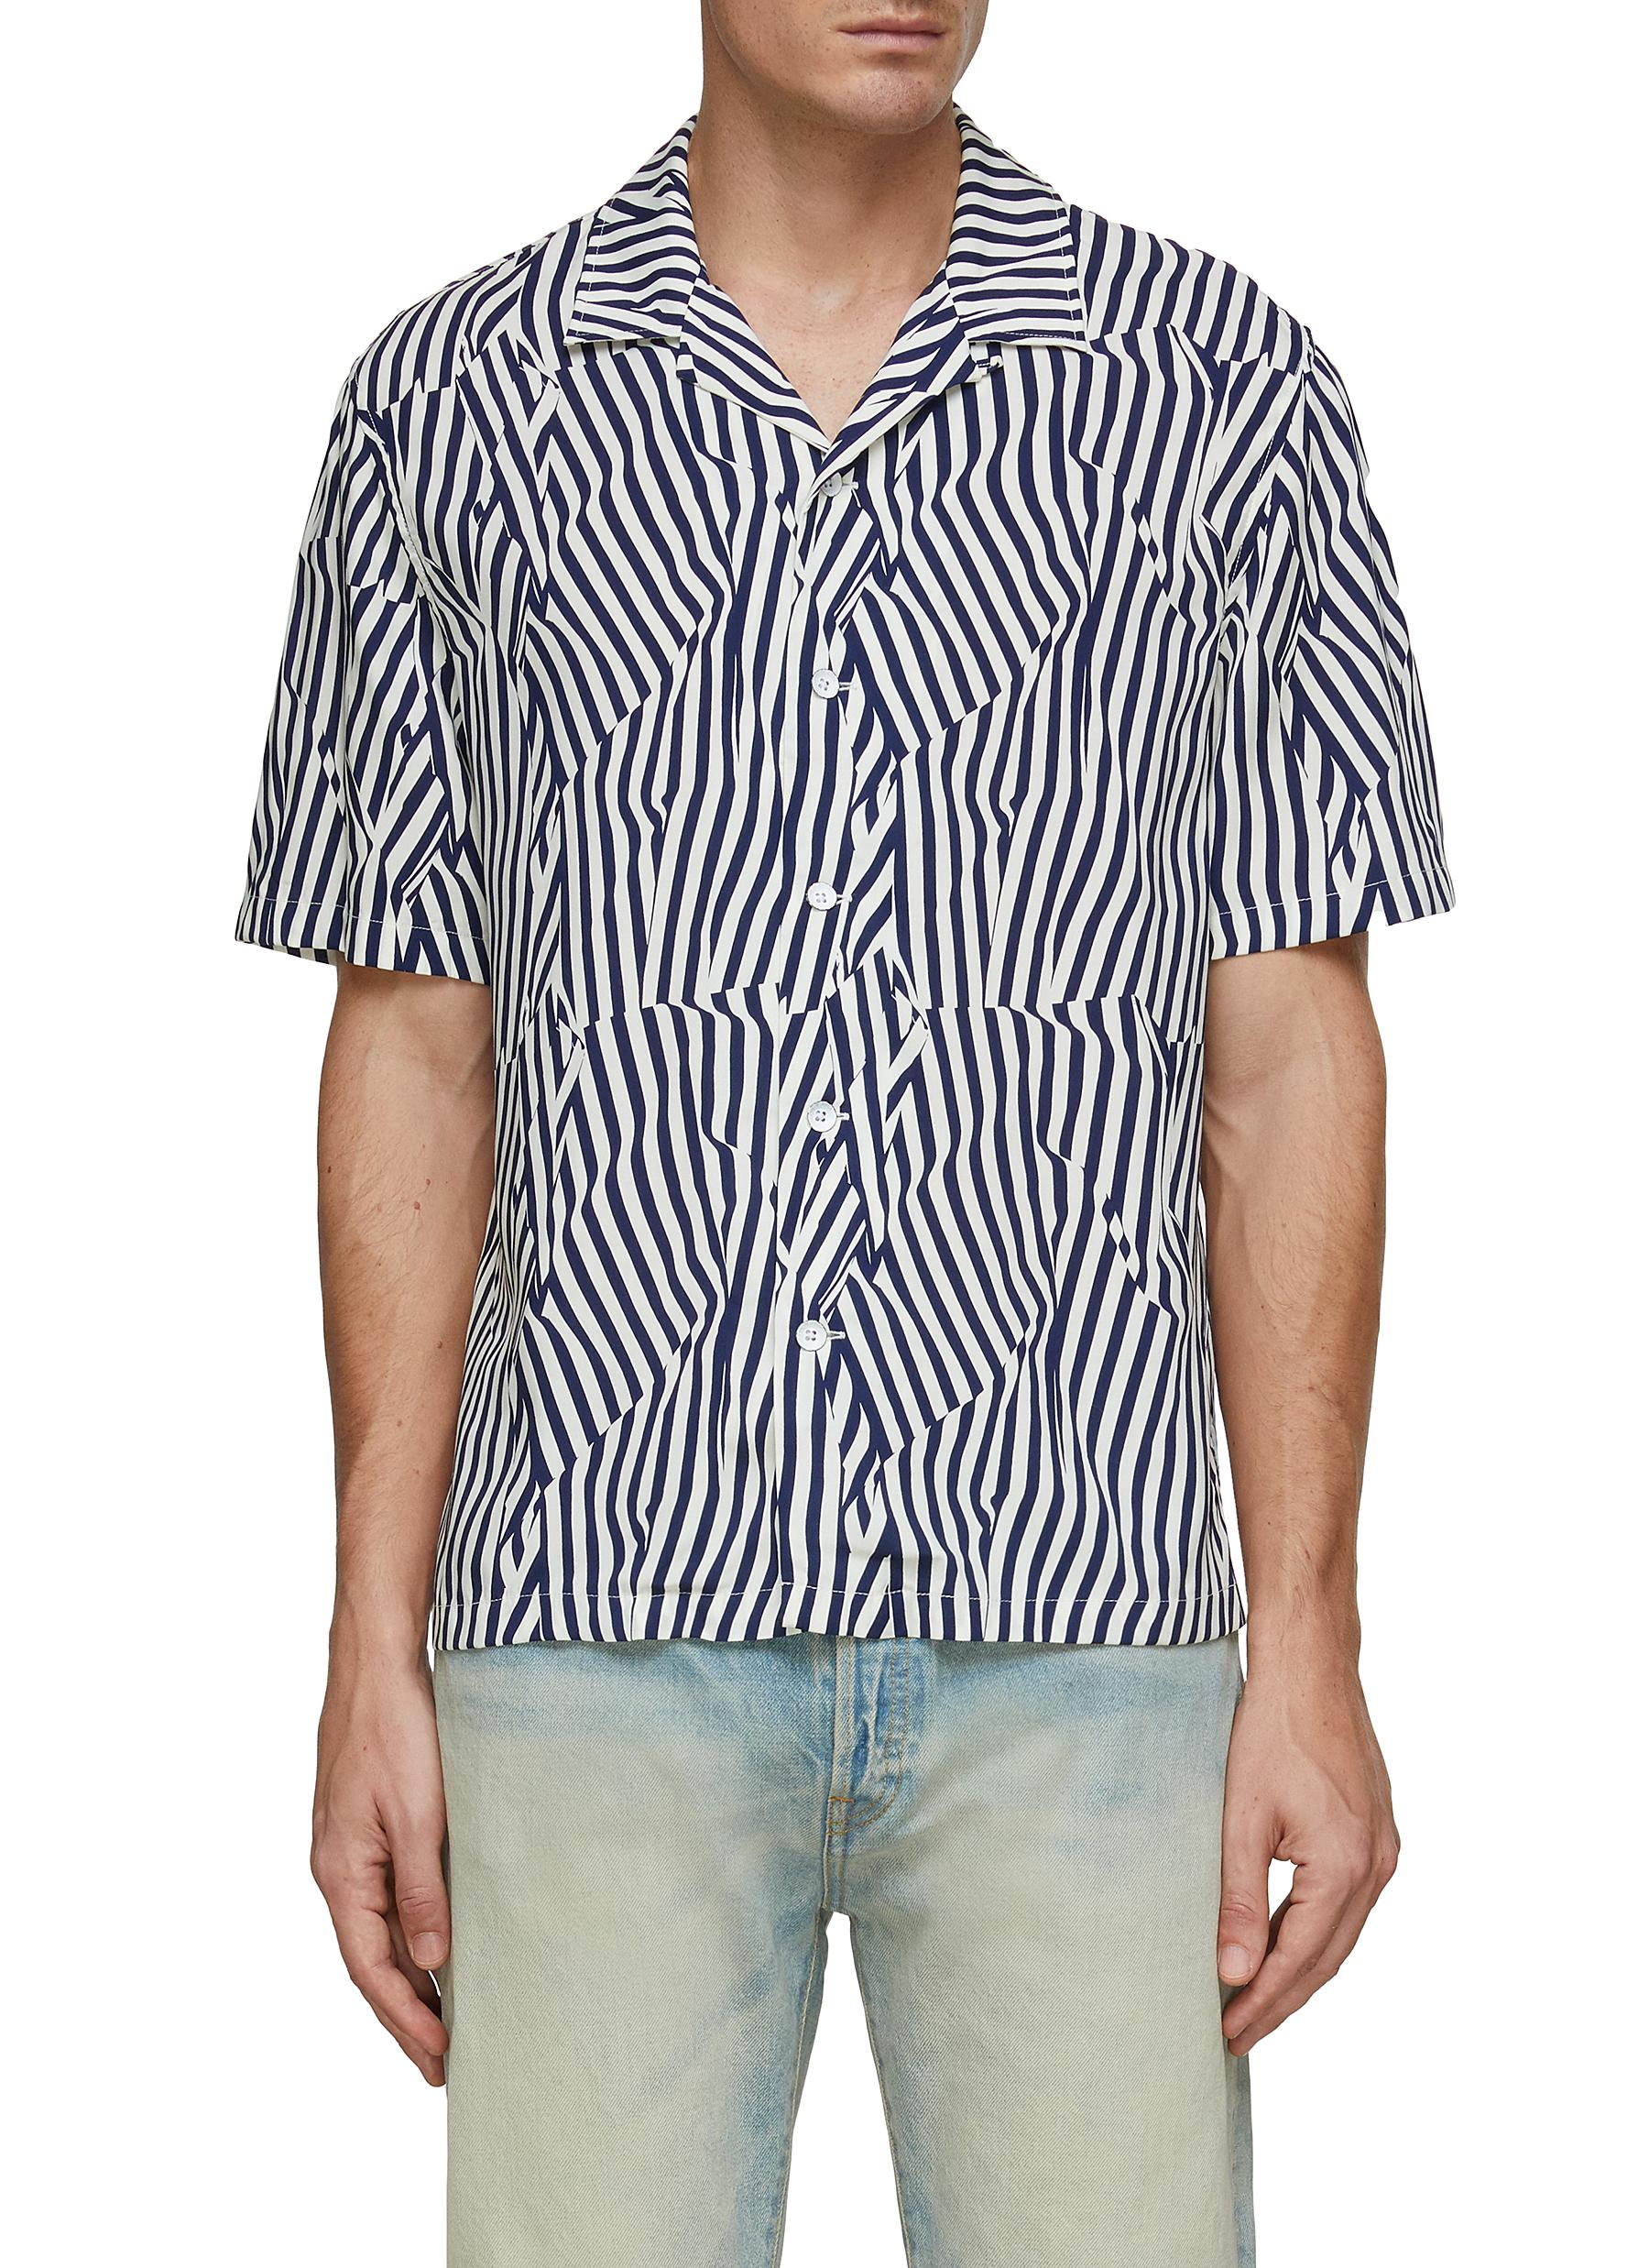 Avery Striped Shirt